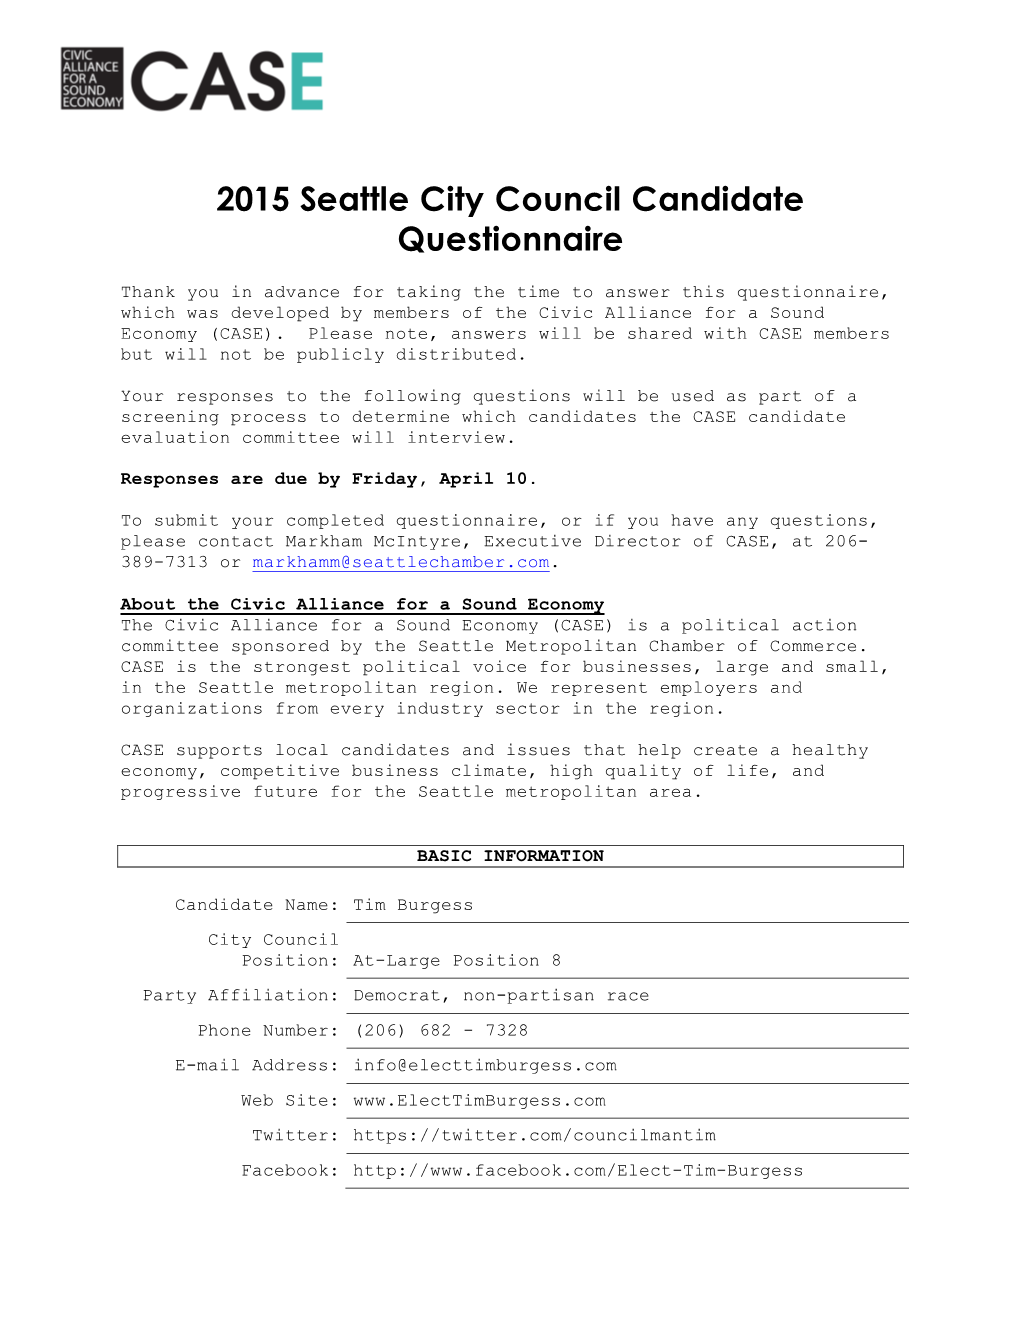 2015 Seattle City Council Candidate Questionnaire